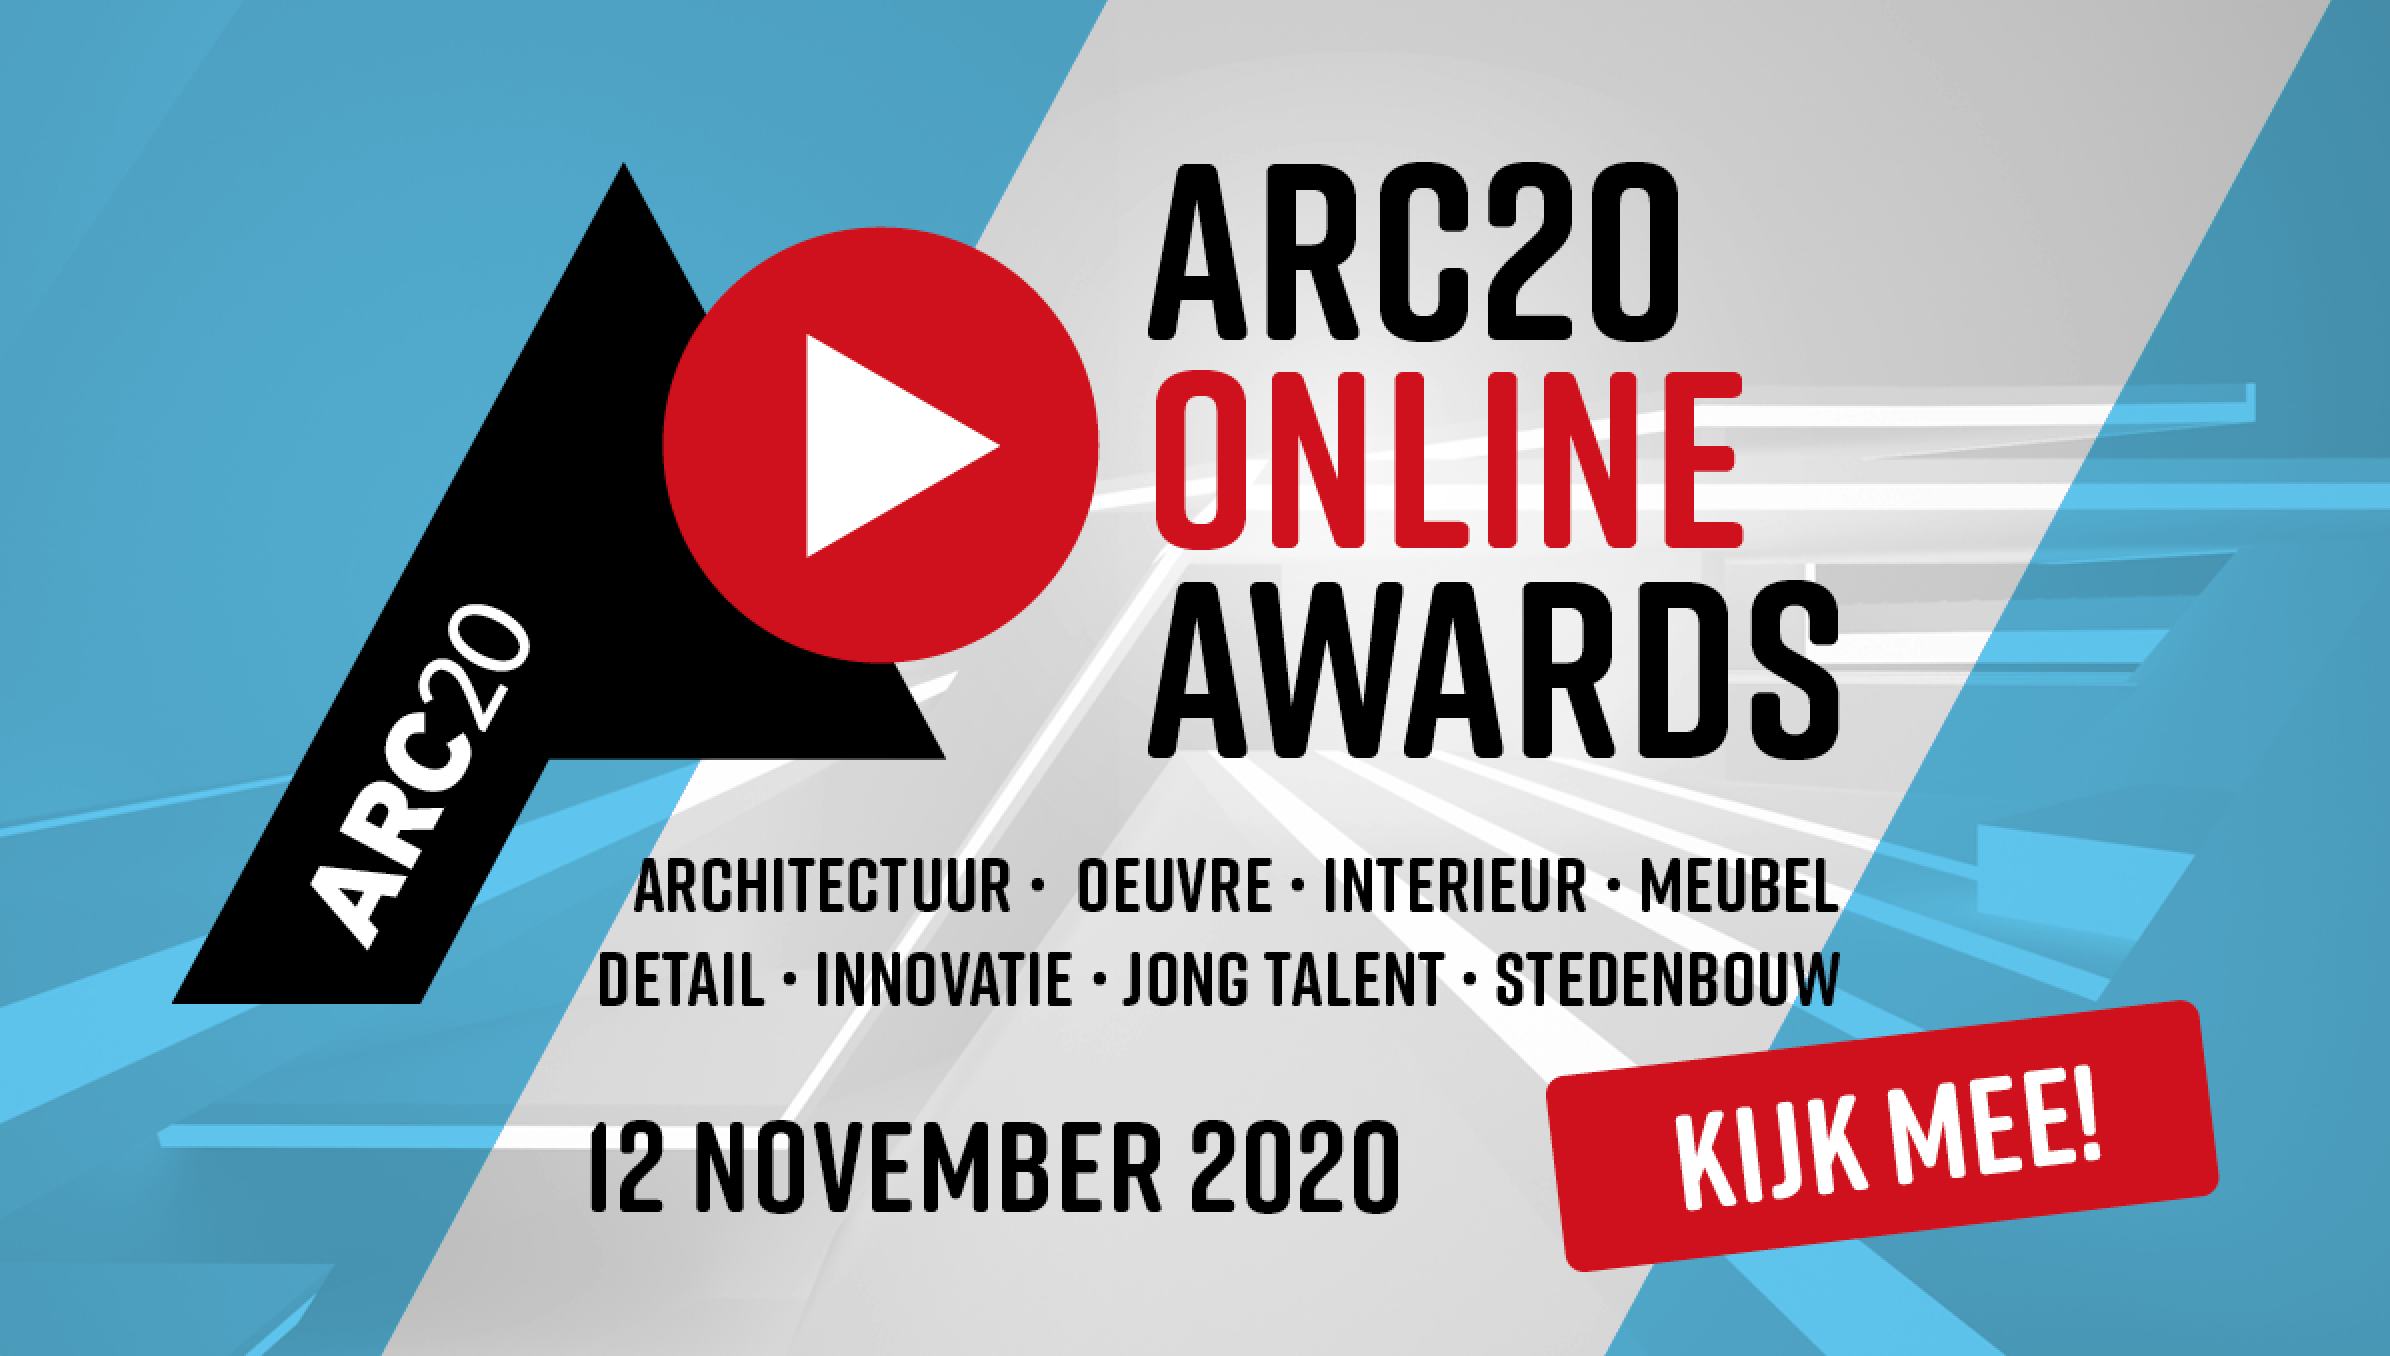 Donderdag 12 november uitreiking ARC20 Awards